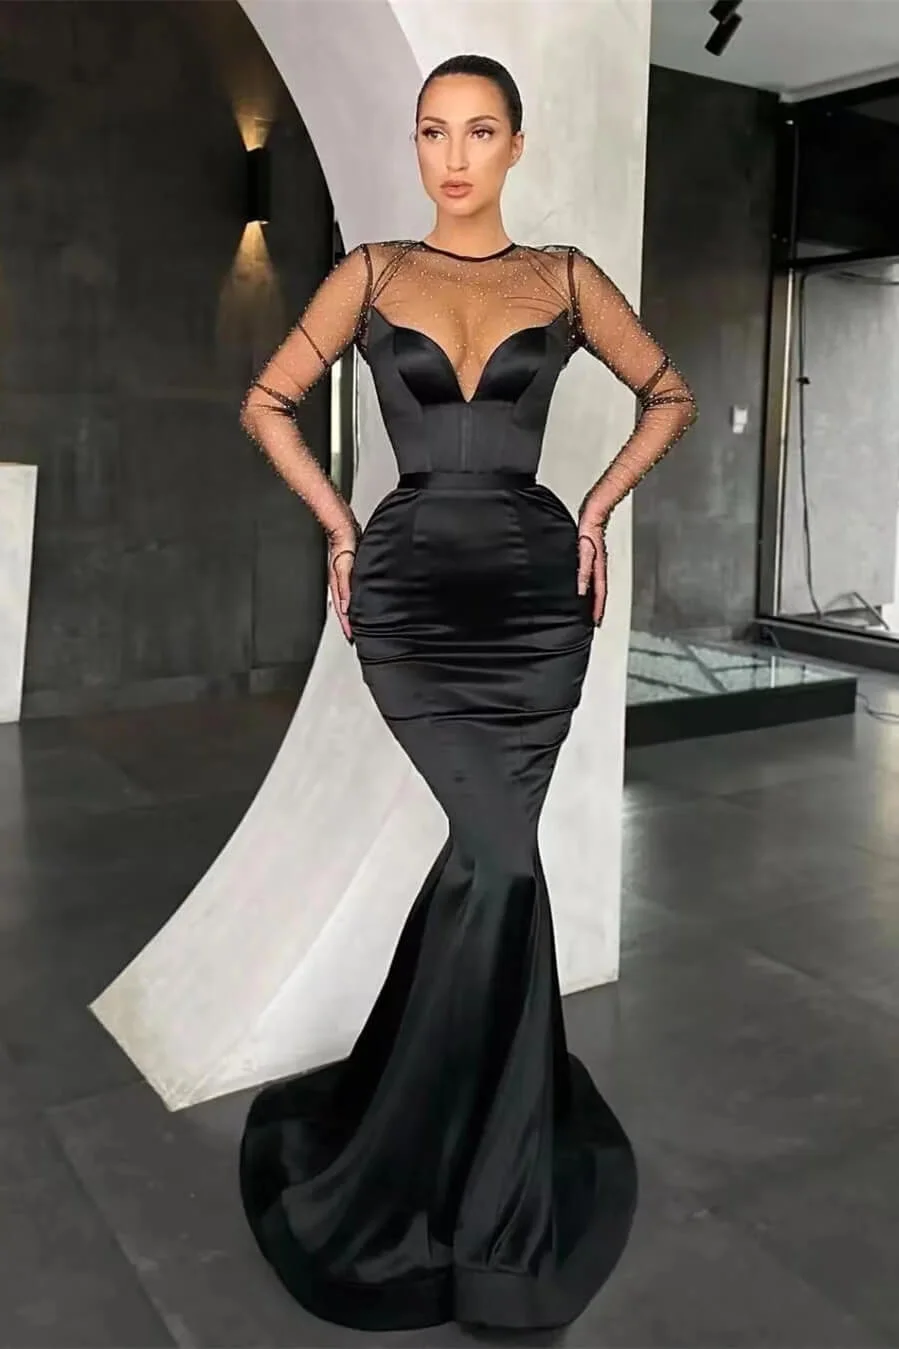 Daisda Black Mermaid Long Sleeves Prom Dress With Beads Online V-Neck